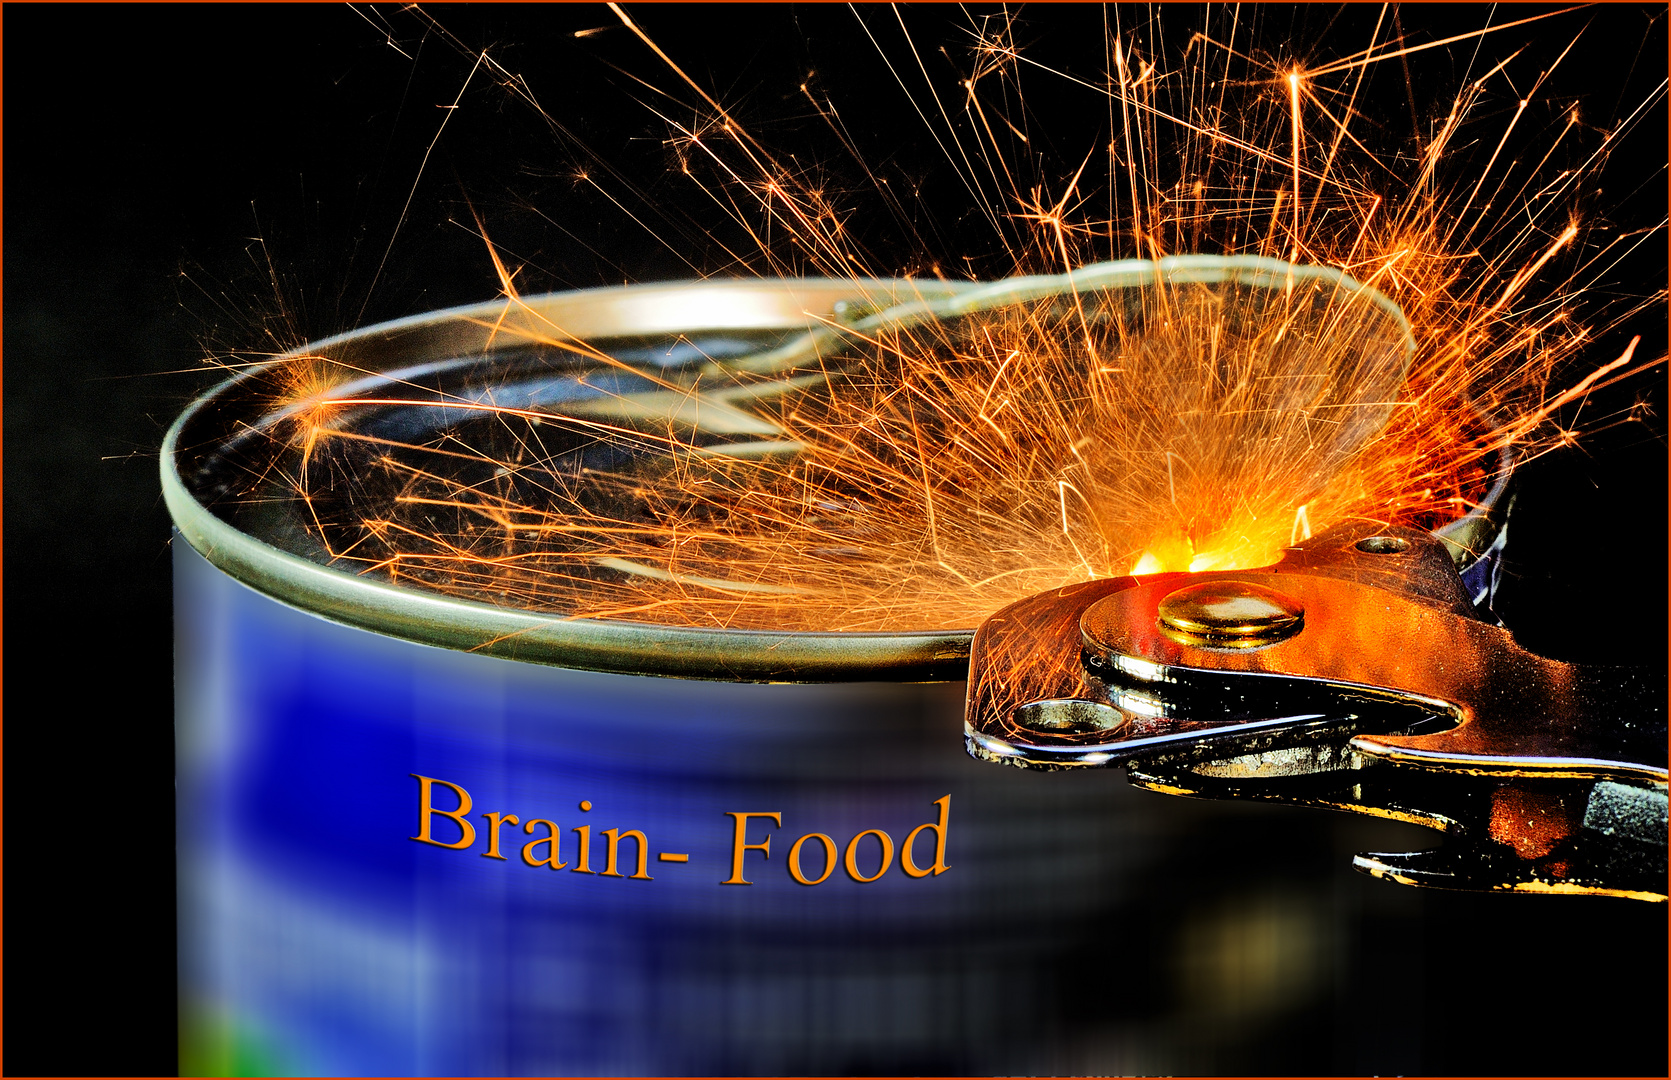 Brain- Food